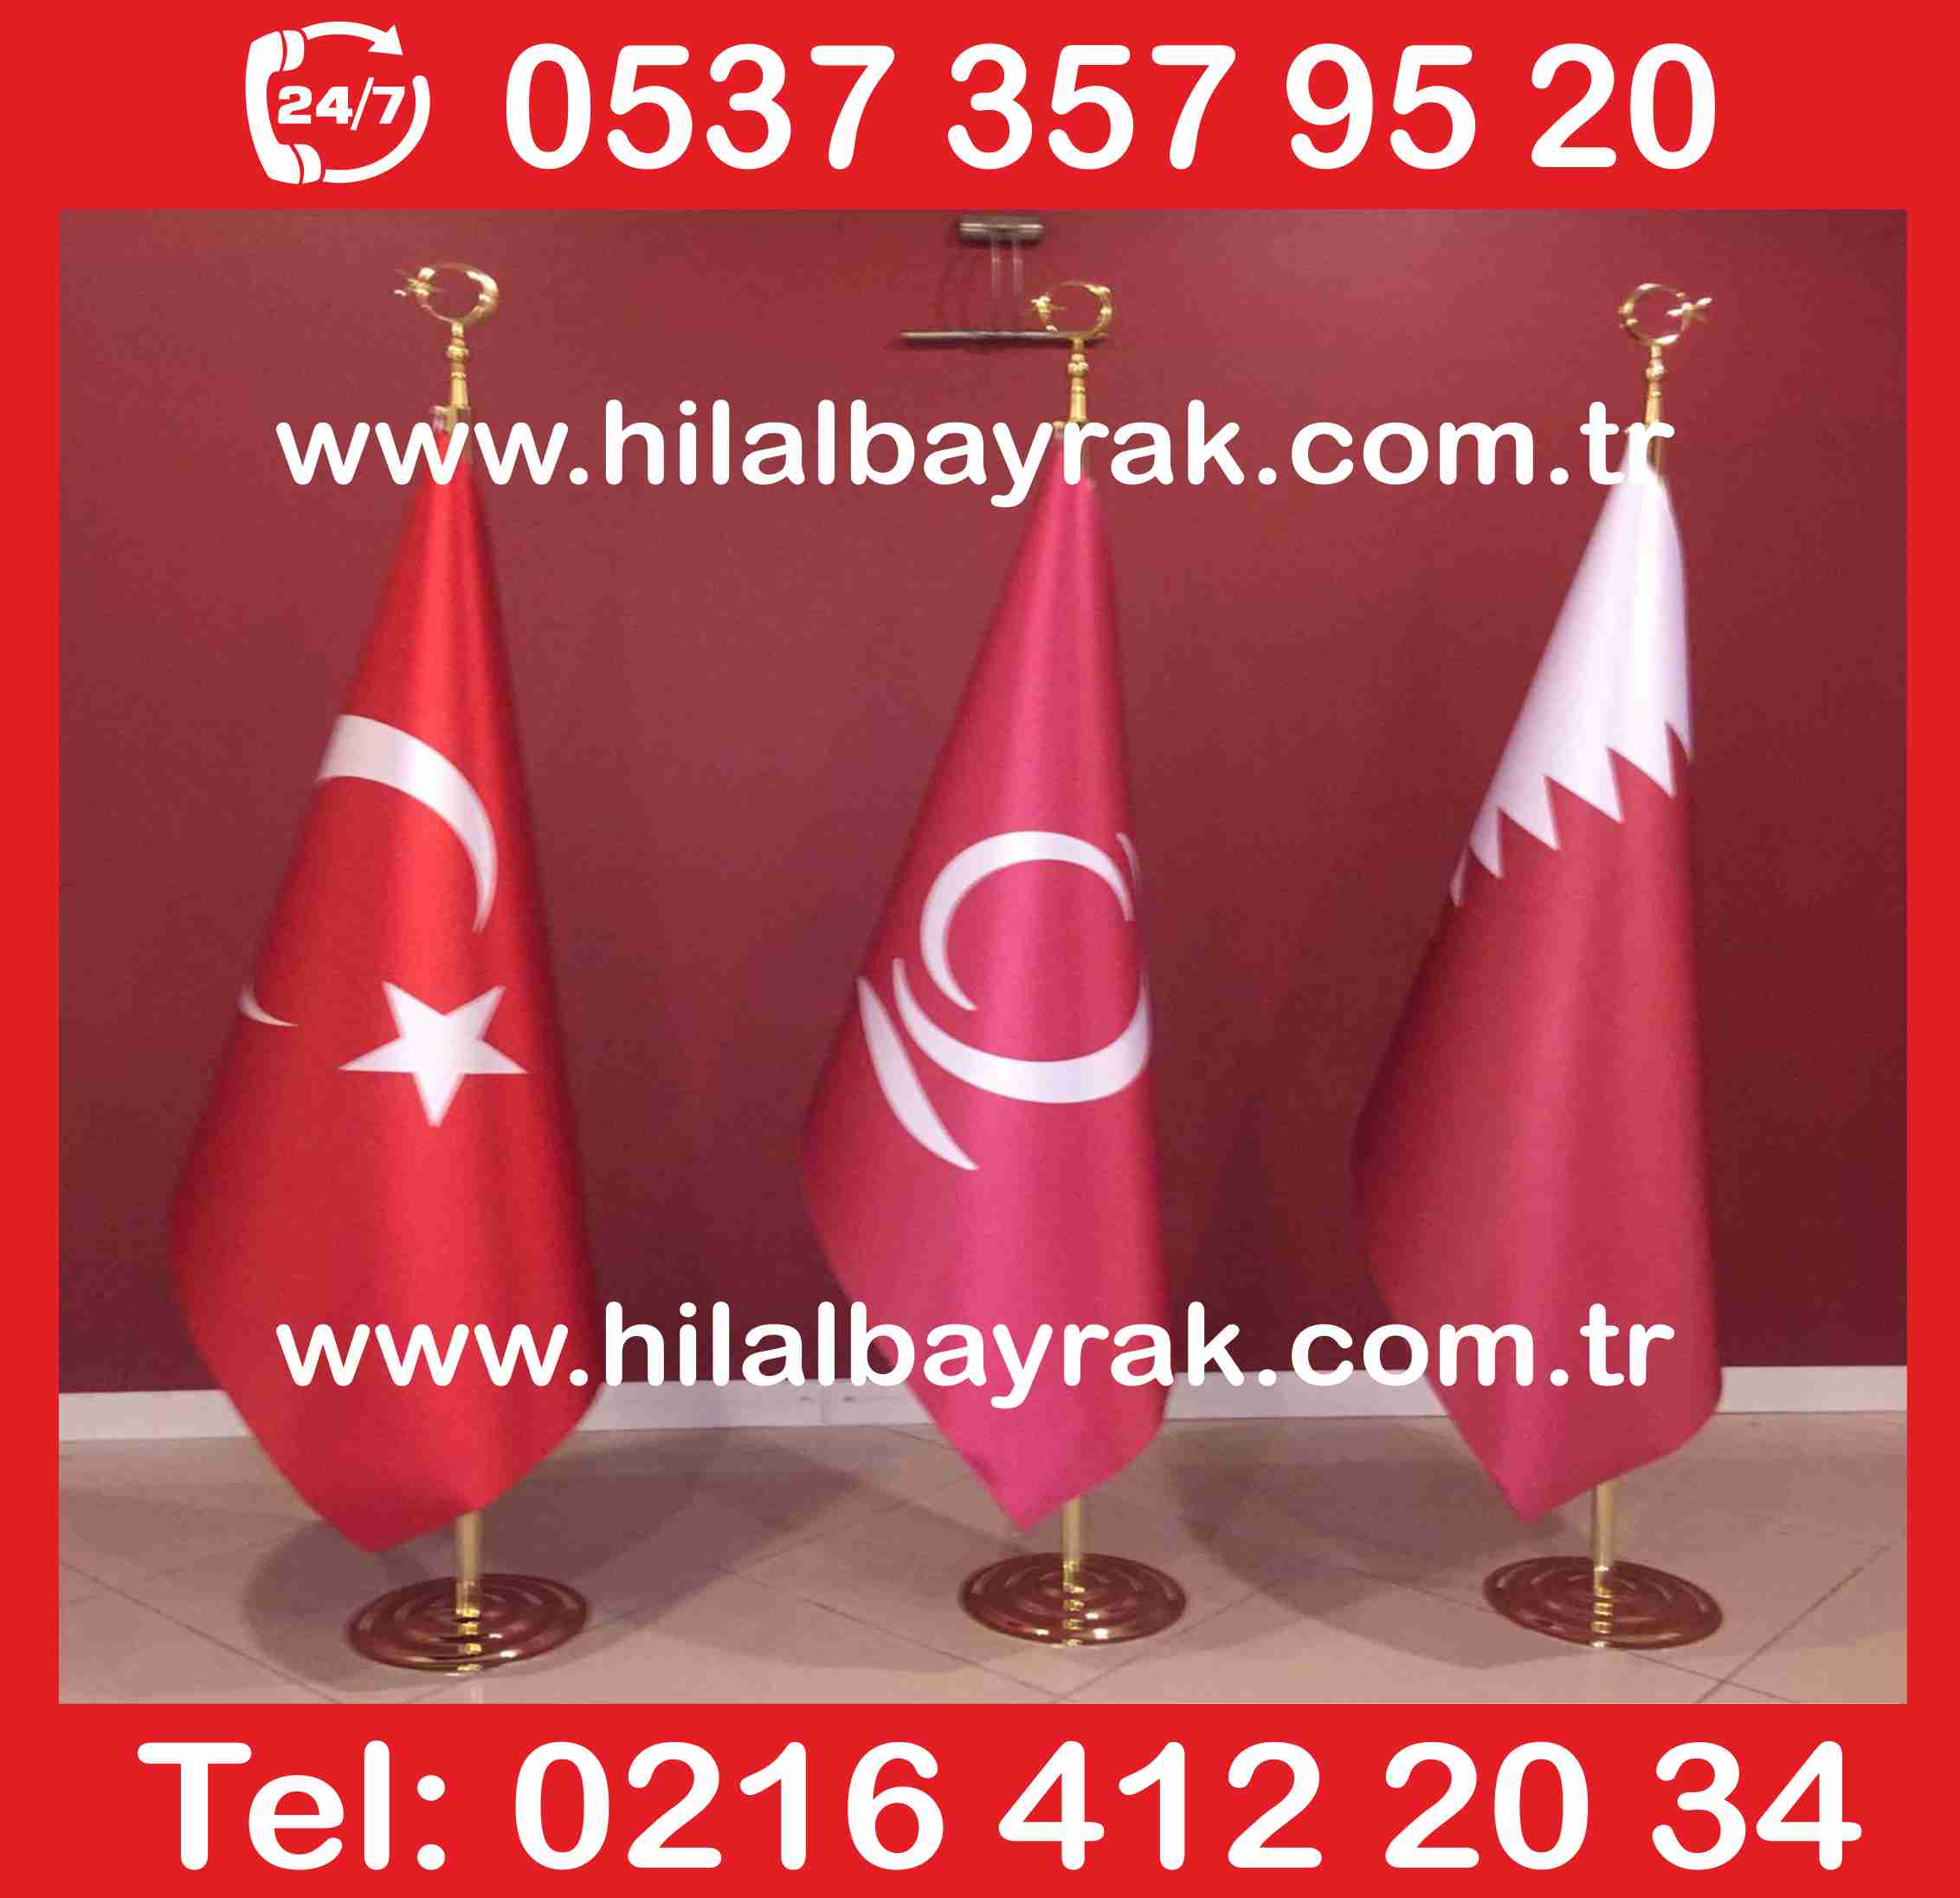 Makam Bayrak İstanbul, makam bayrak, satışı, makam bayrak  Ümraniye, makam bayrak imalatı, acil makam bayrağı, makam bayrakları, makam bayrak satışı ACİL 7.24 SAAT AÇIK HİZMET